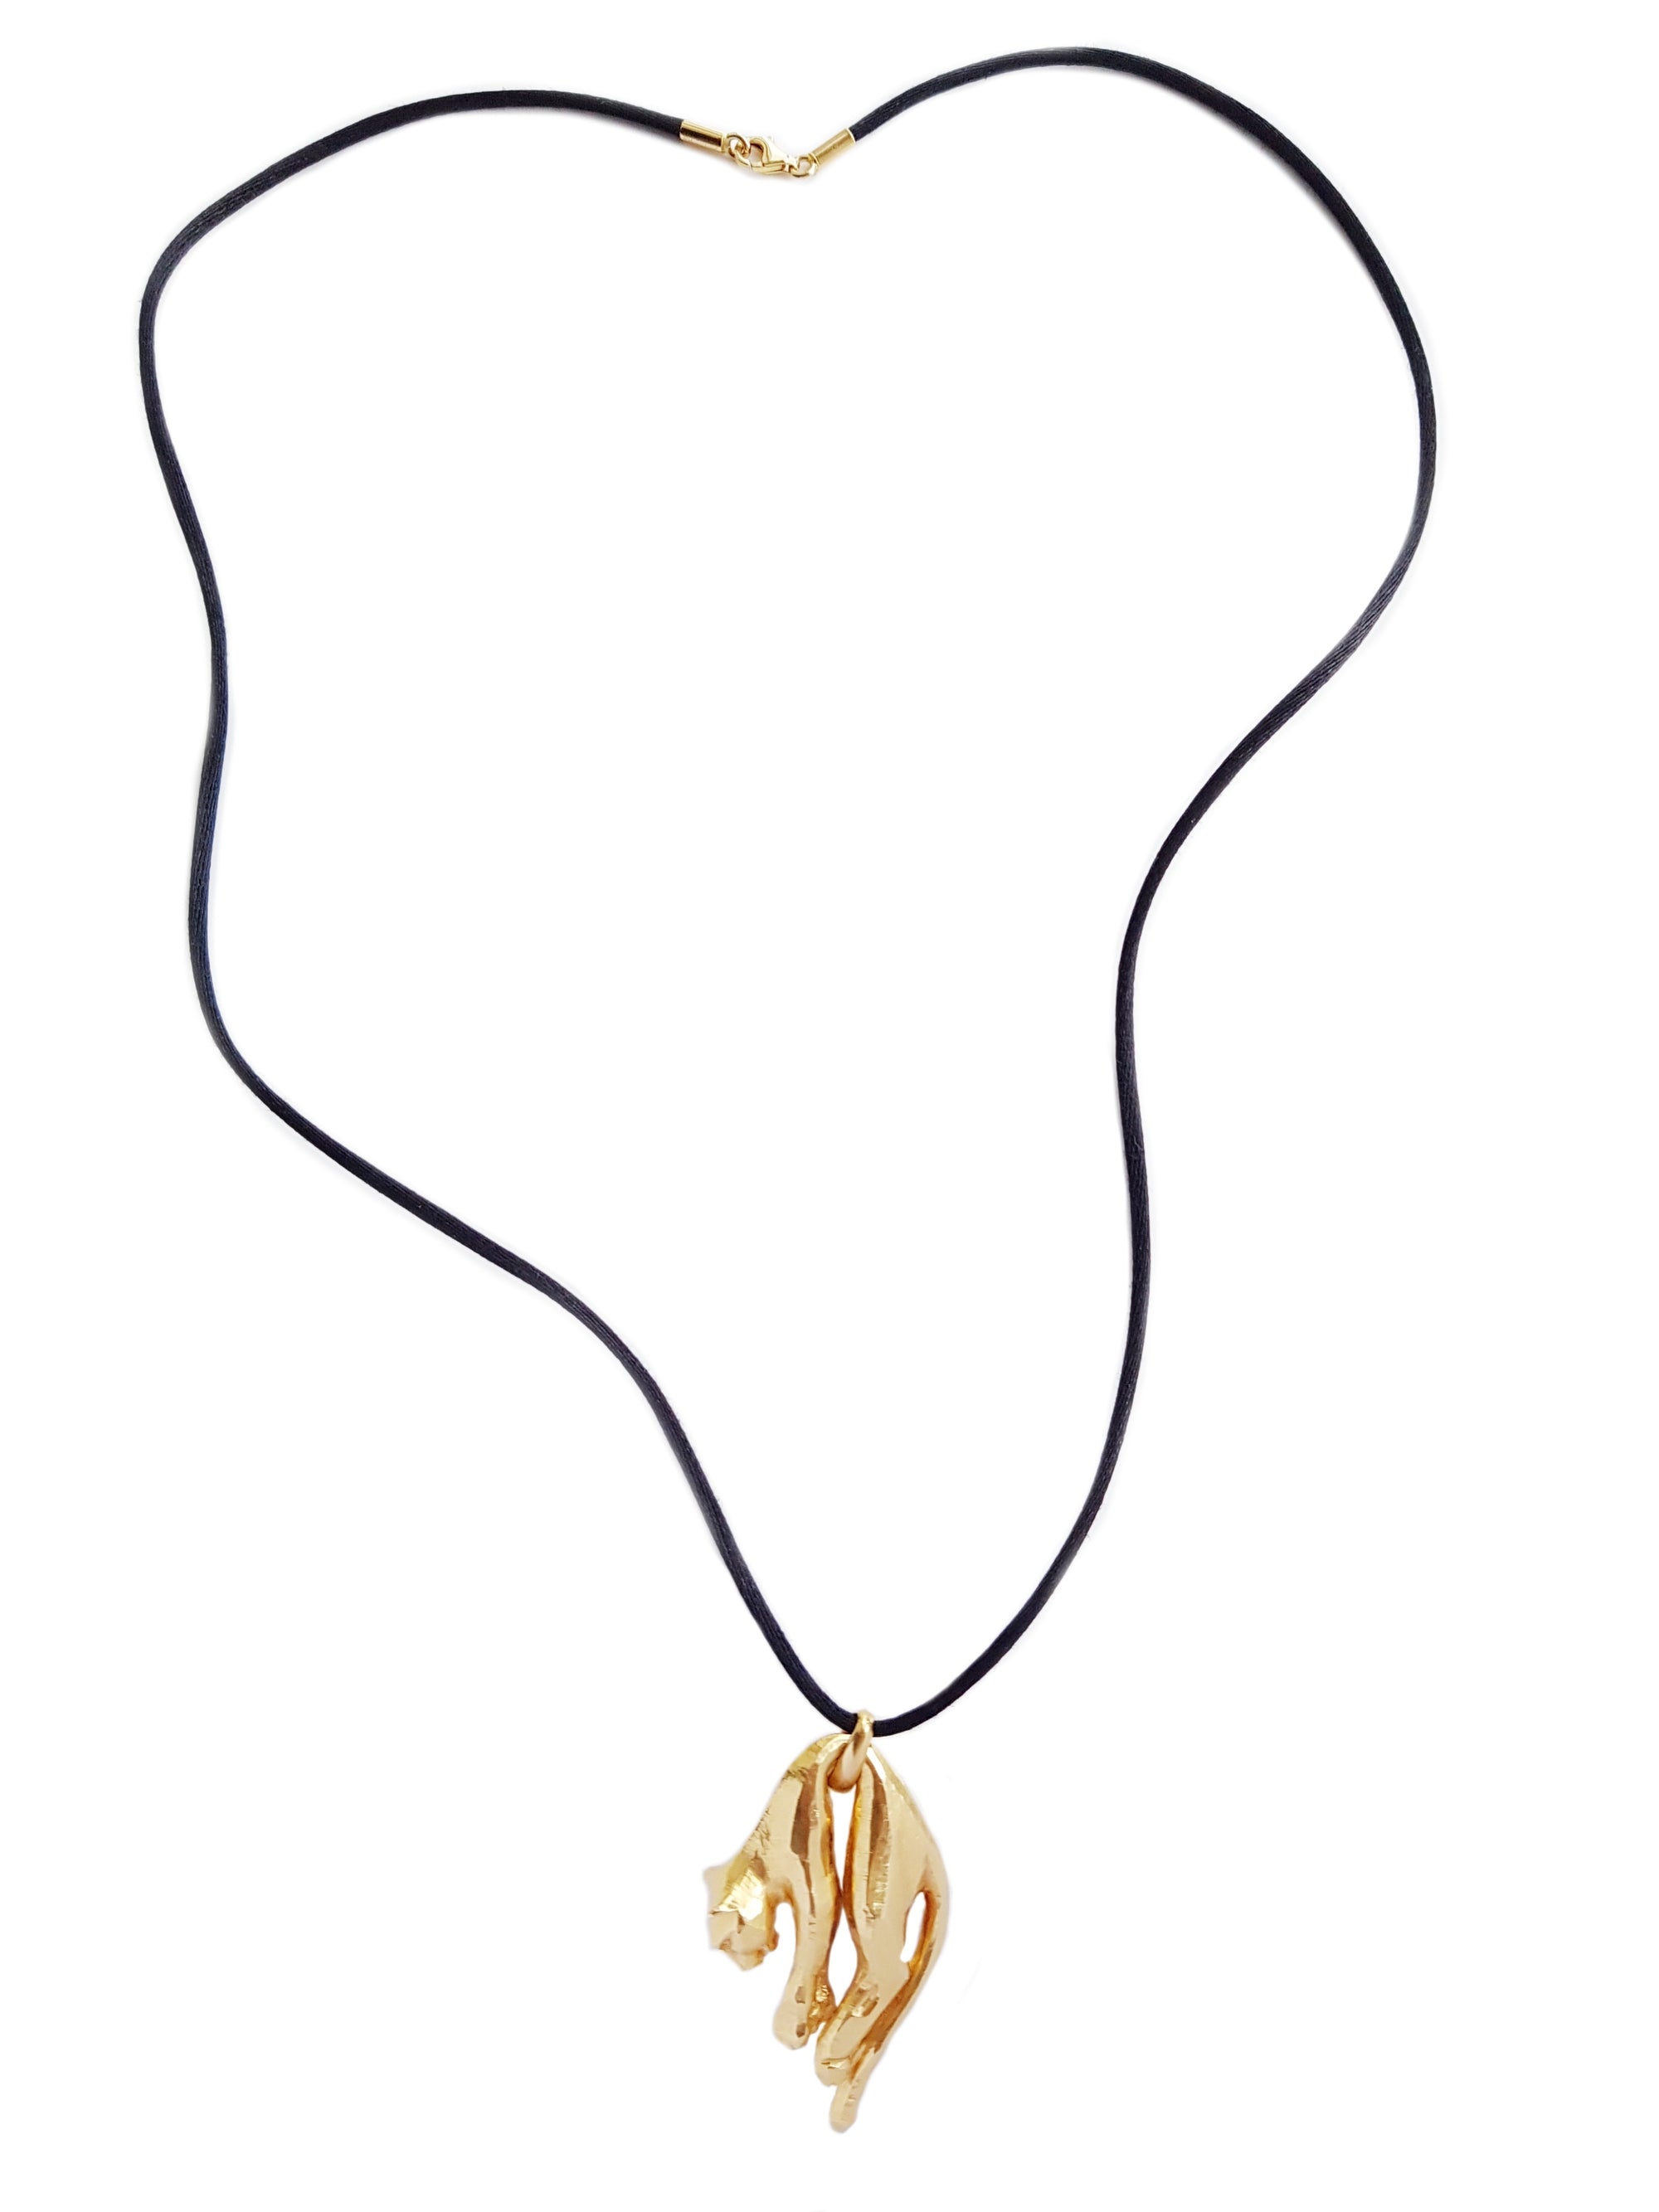 Vintage 1981 Cartier Panthère Molle Pendant Necklace with Cord & Chain